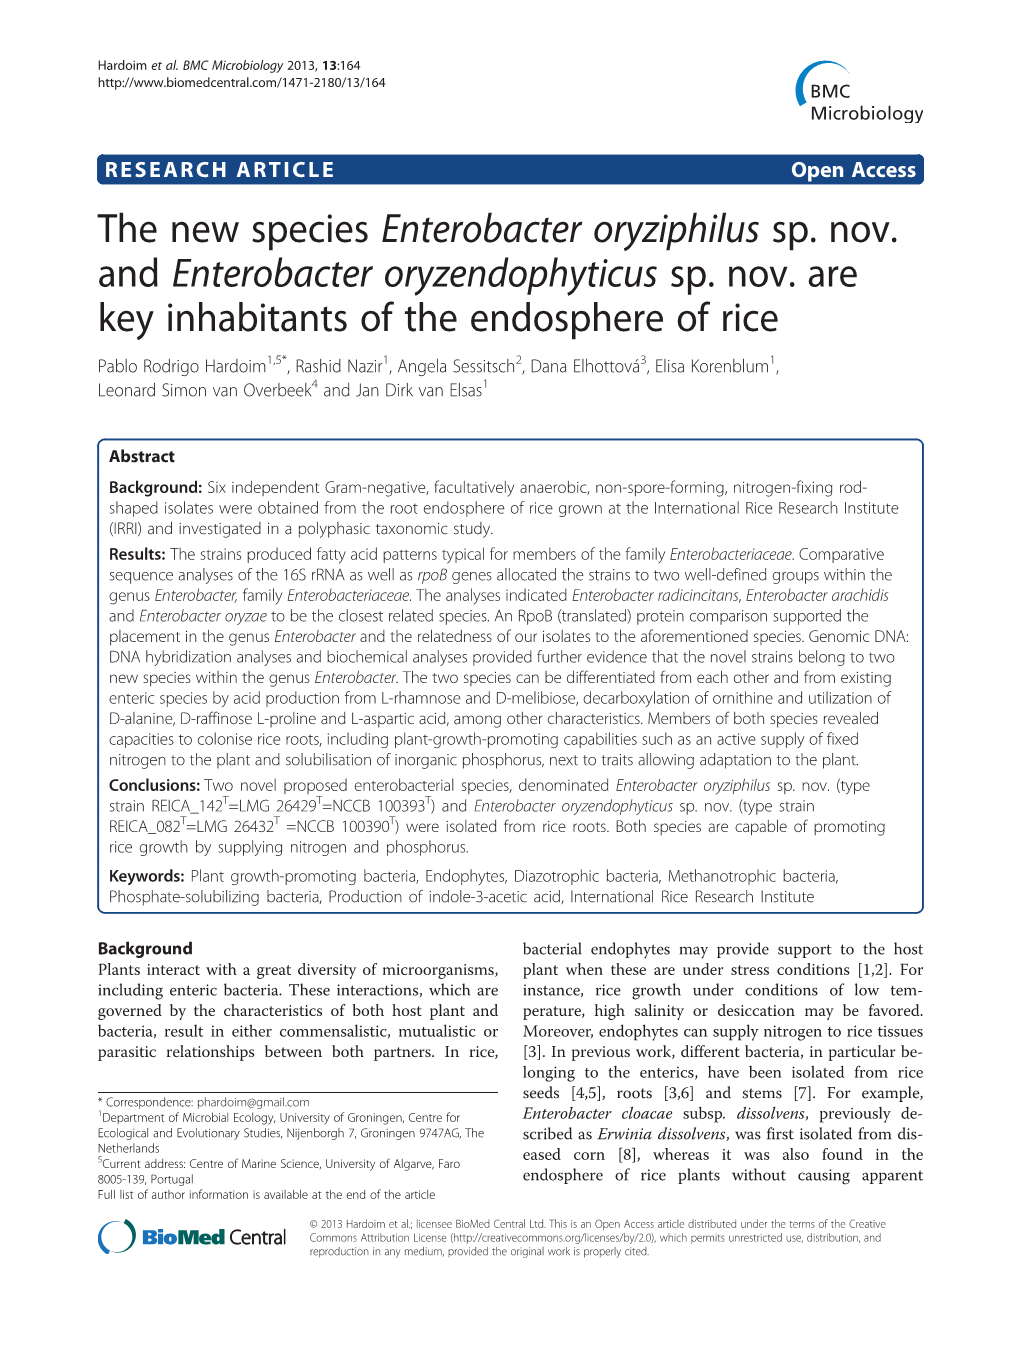 The New Species Enterobacter Oryziphilus Sp. Nov. and Enterobacter Oryzendophyticus Sp